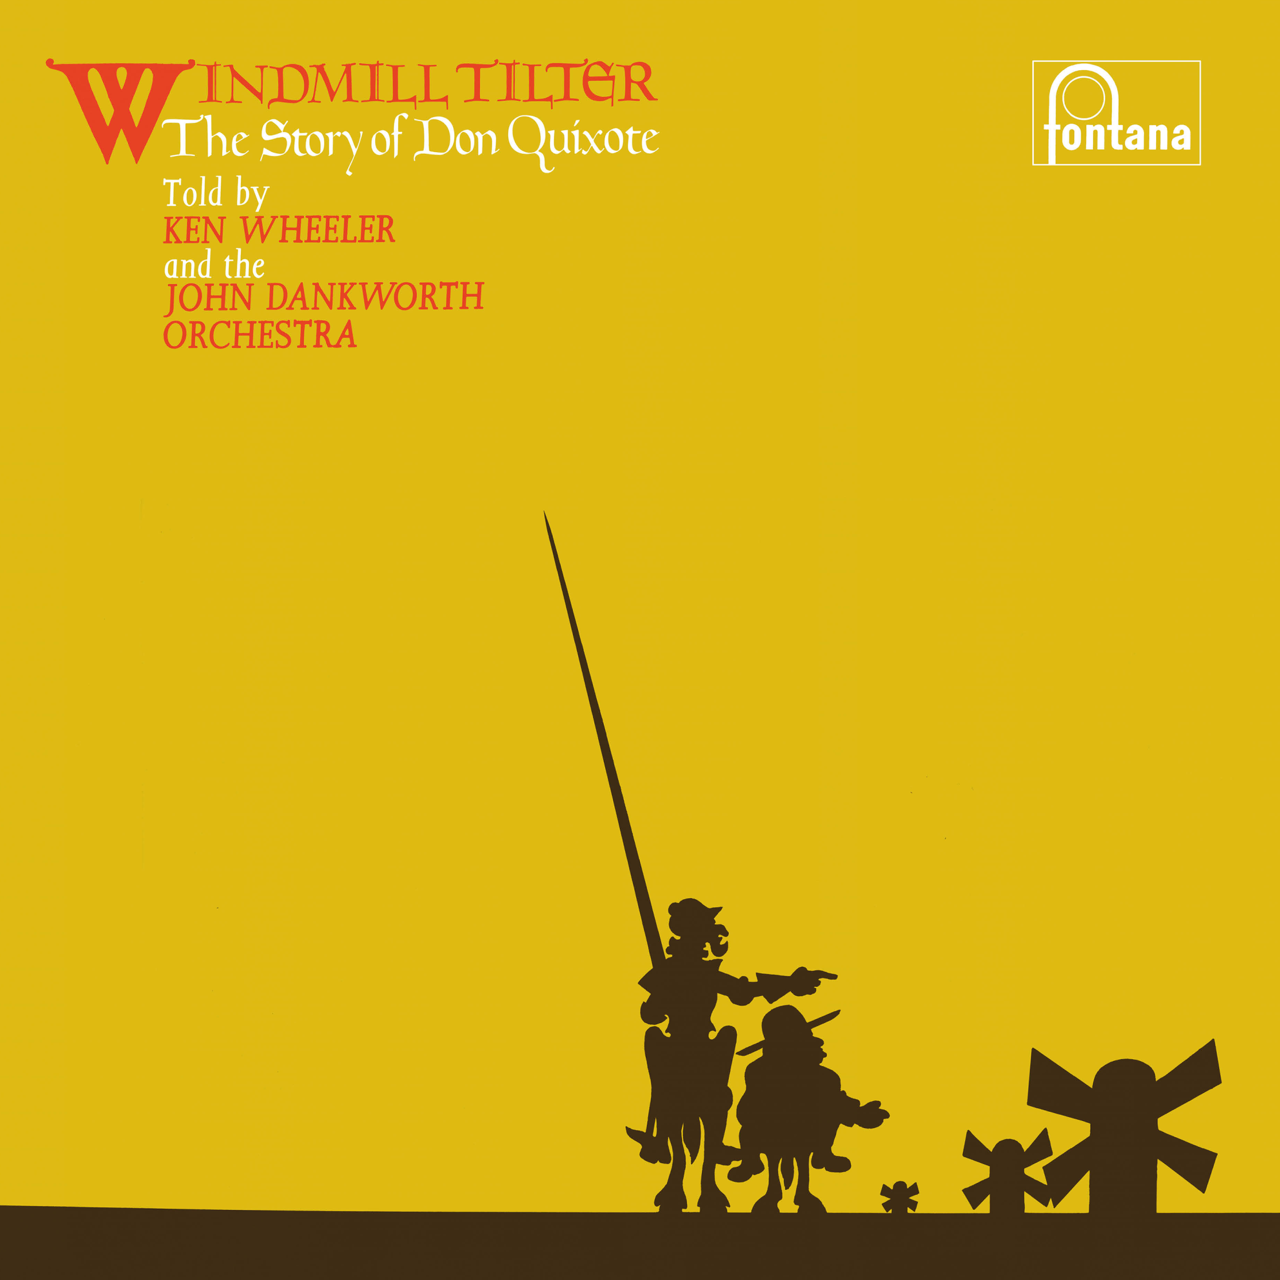 Ken Wheeler & The John Dankworth Orchestra - Windmill Tilter (The Story of Don Quixote) (British Jazz Explosion Series) (Decca)